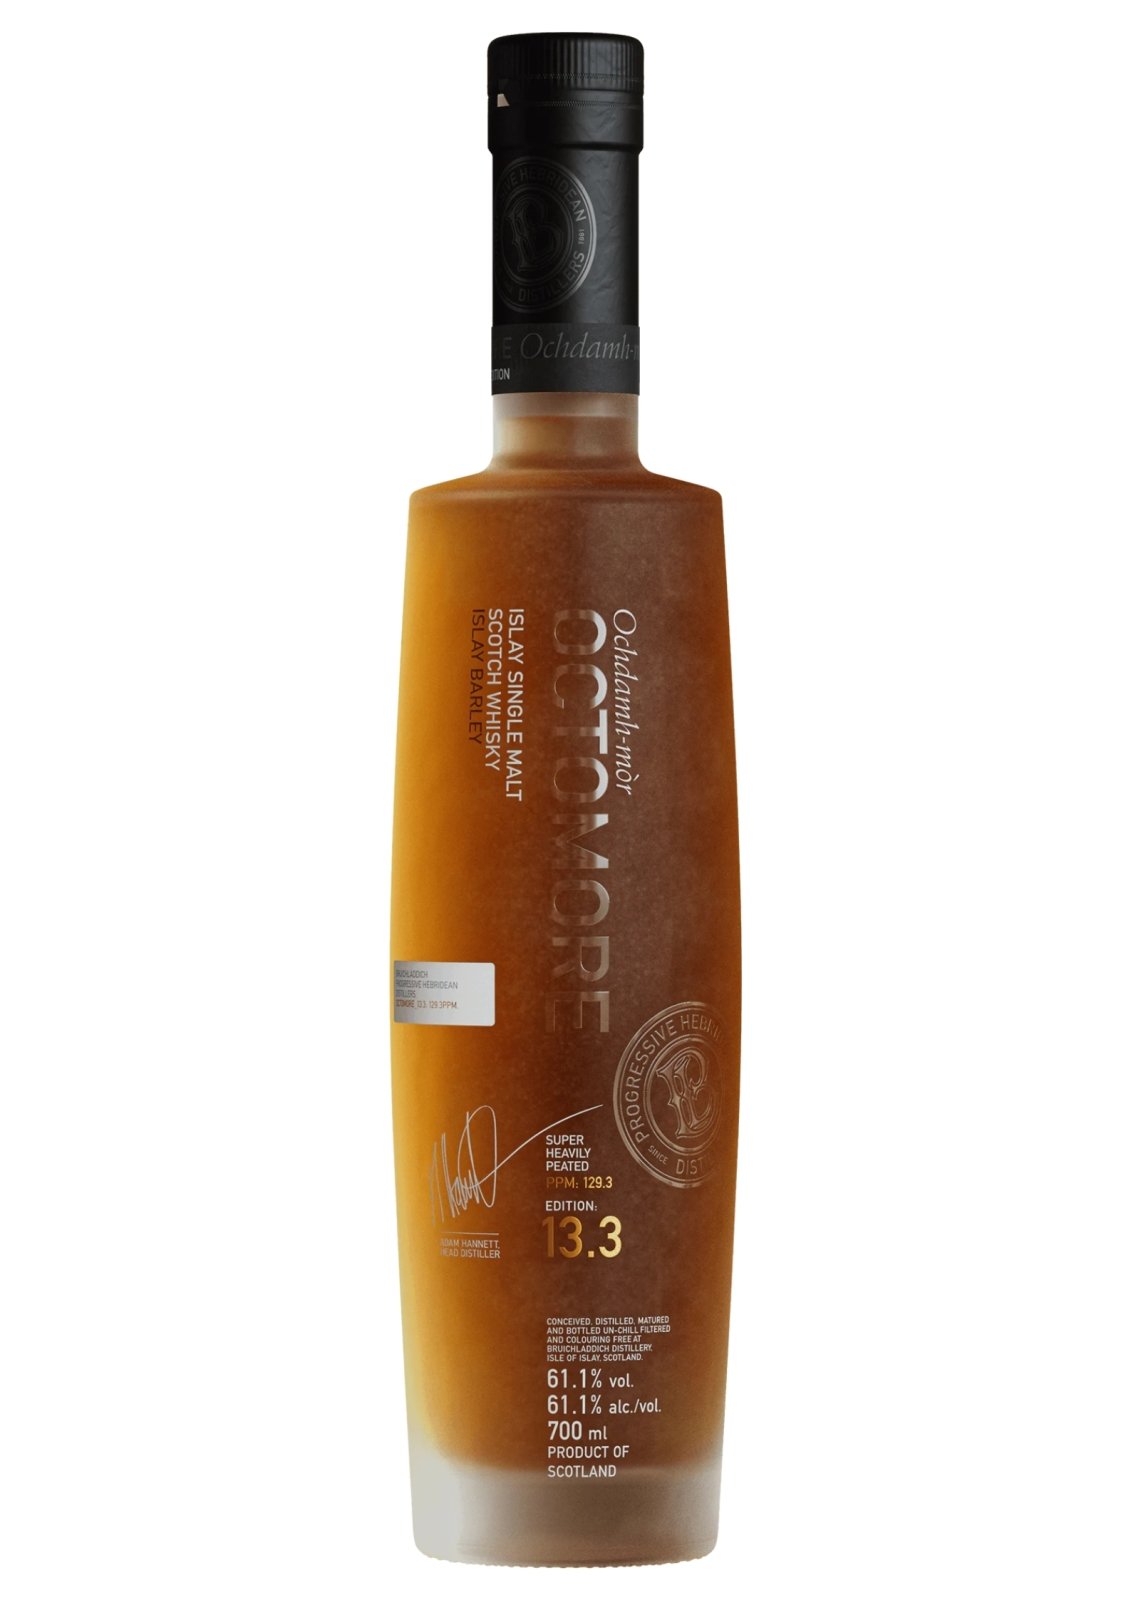 Bottle of Octomore 13.3, Islay Barley, Islay Single Malt Whisky, 61.1%